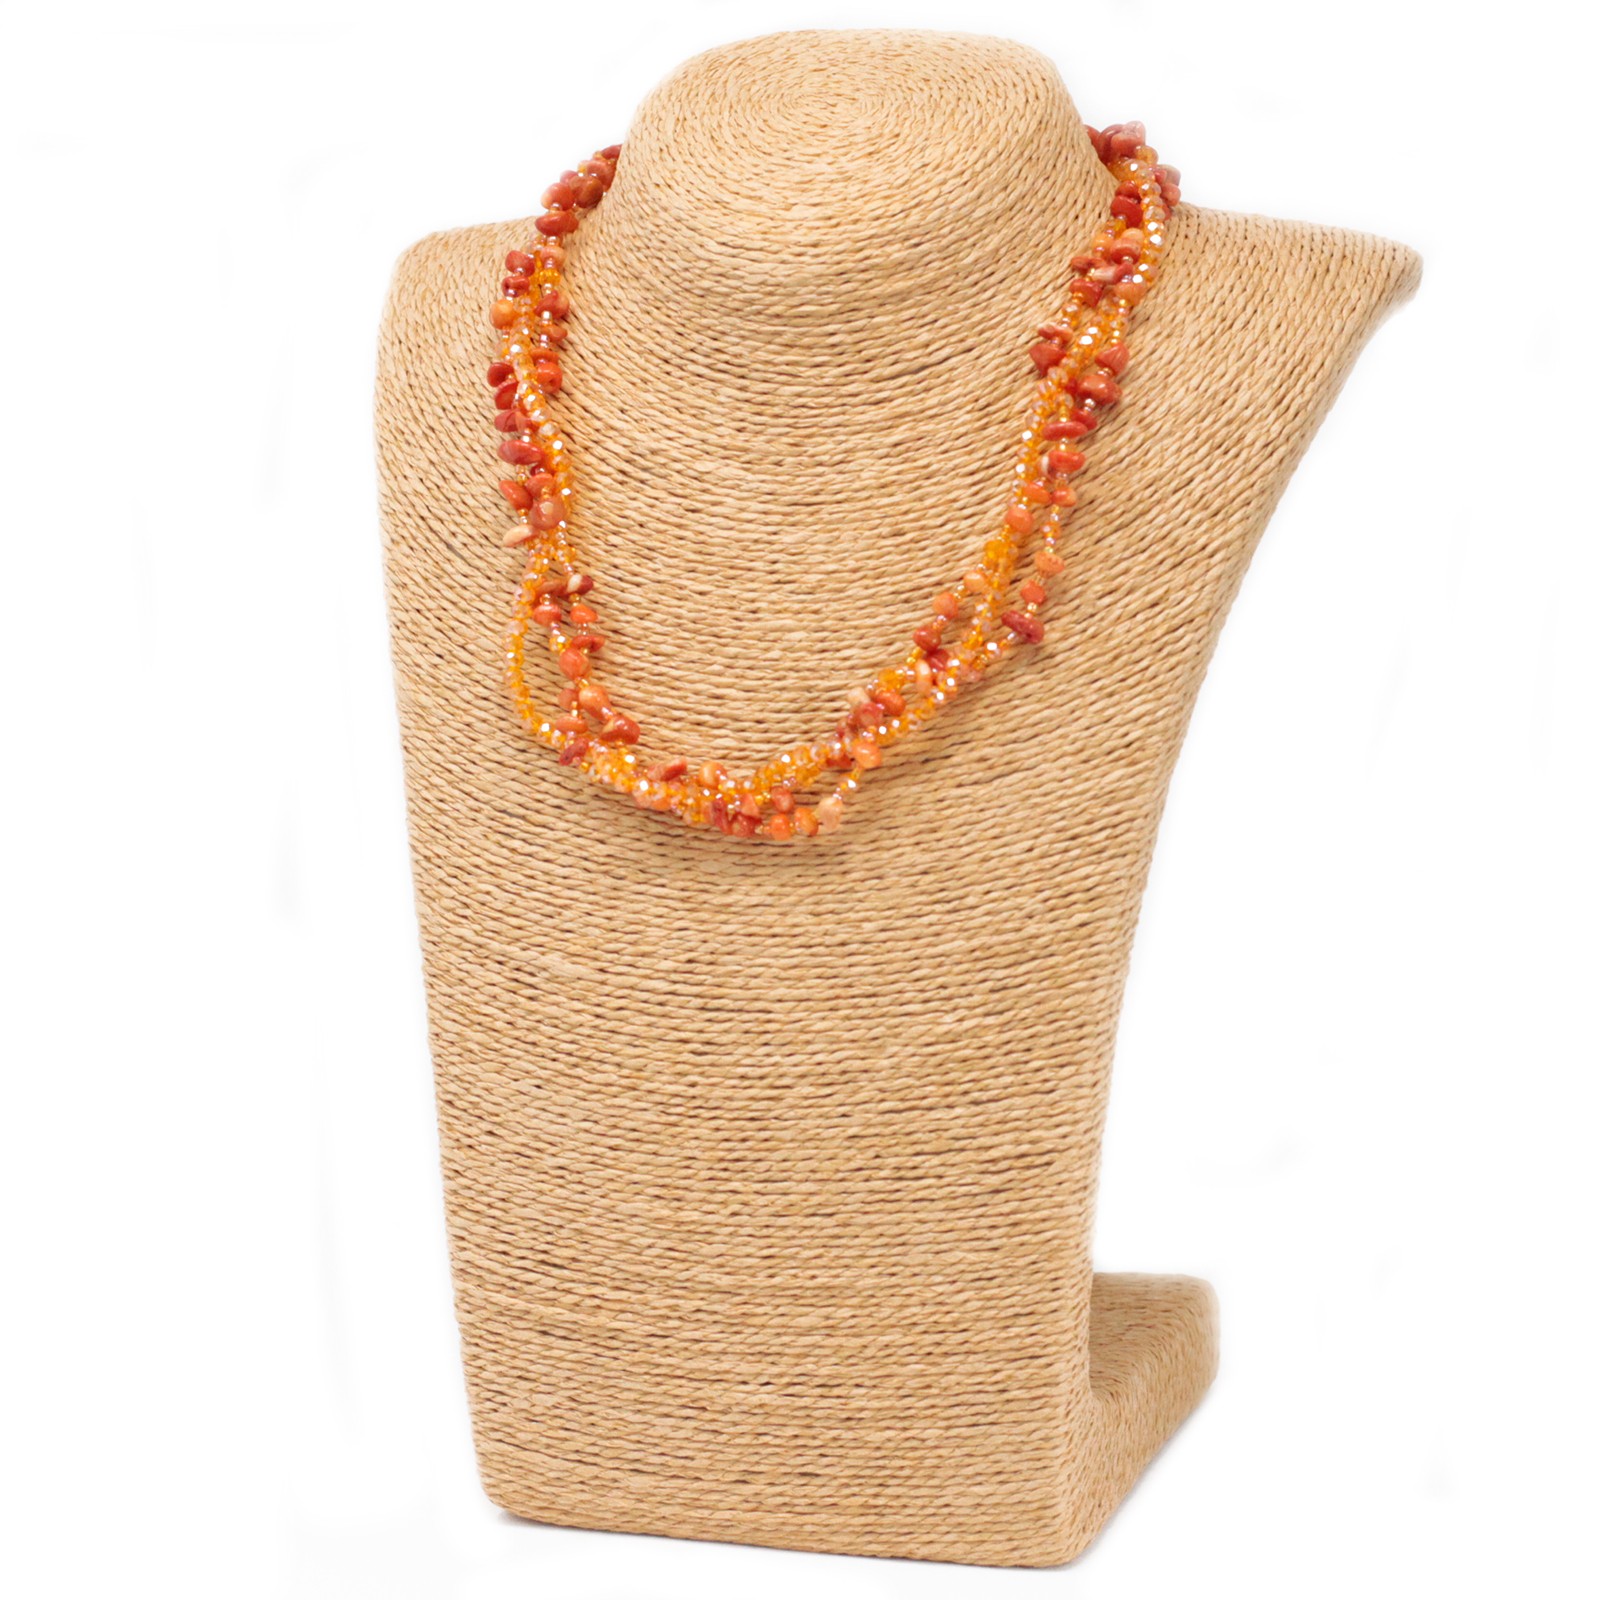 Chipstone & Bead Necklace -Orange Coral